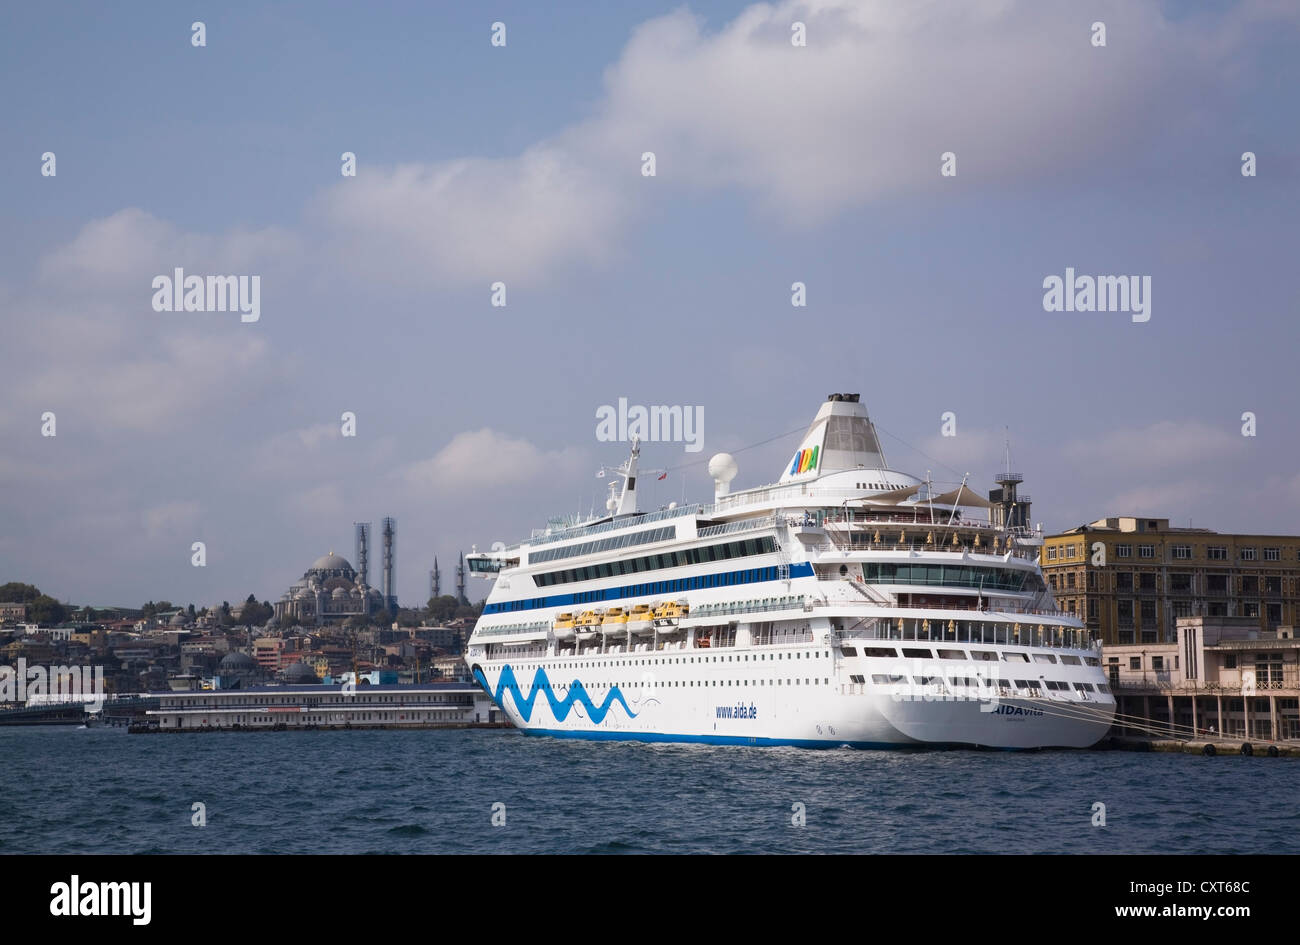 The cruise ship Aidavita at dock on the Bosphorus strait, Istanbul, Turkey, Europe Stock Photo